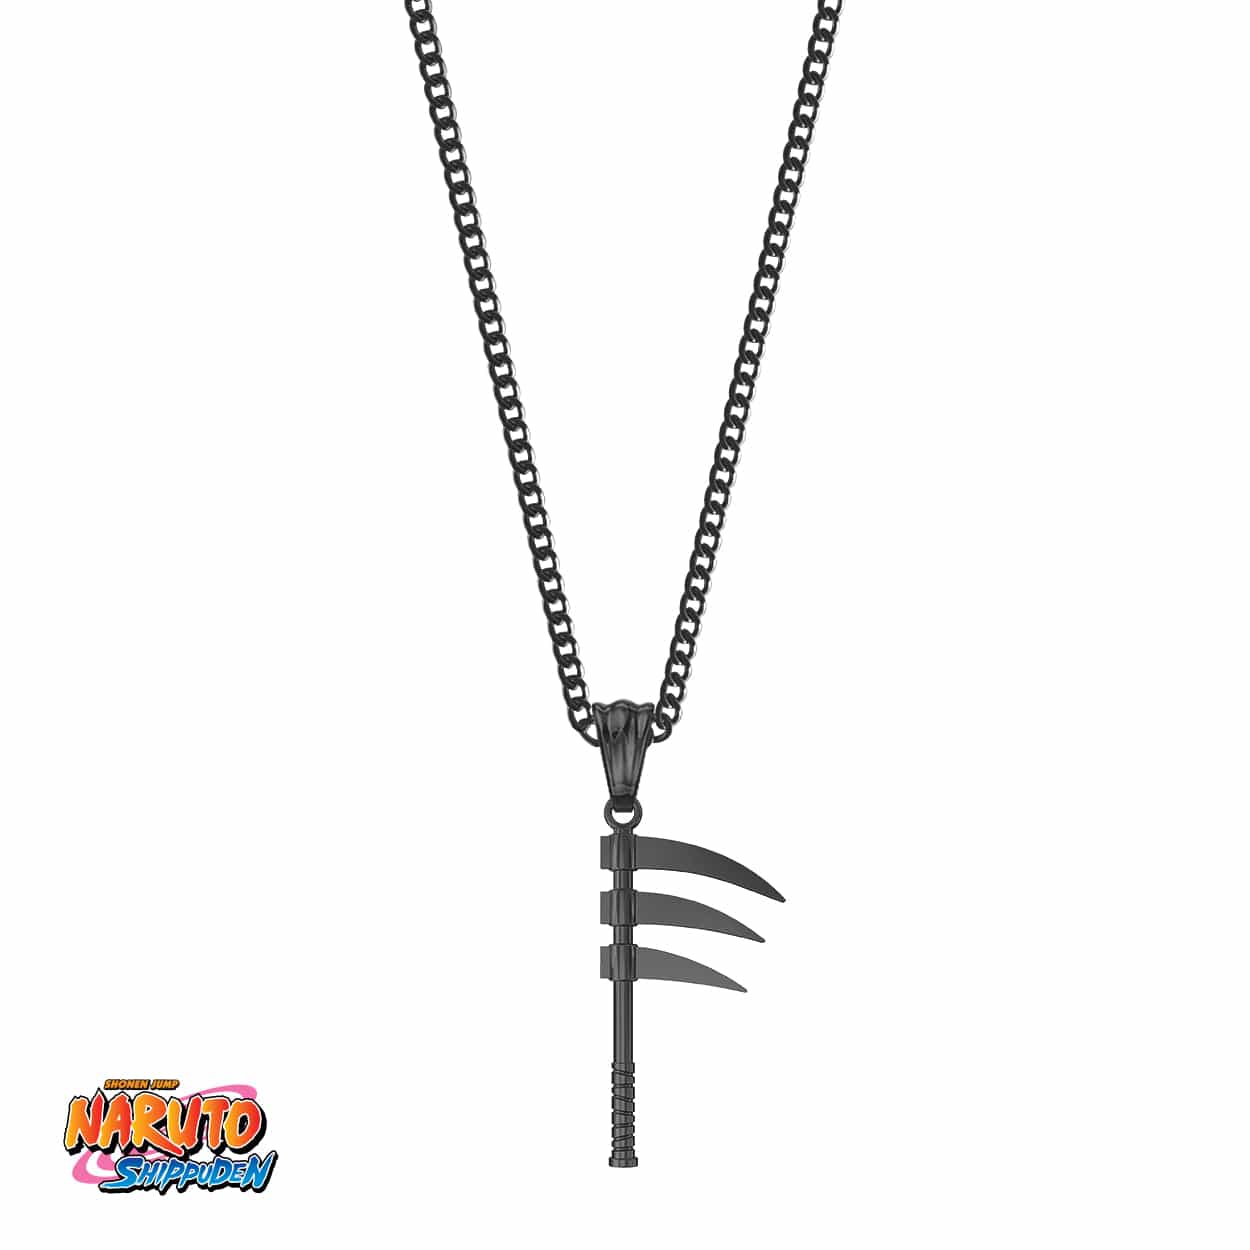 Naruto™ Hidan's Scythe Necklace